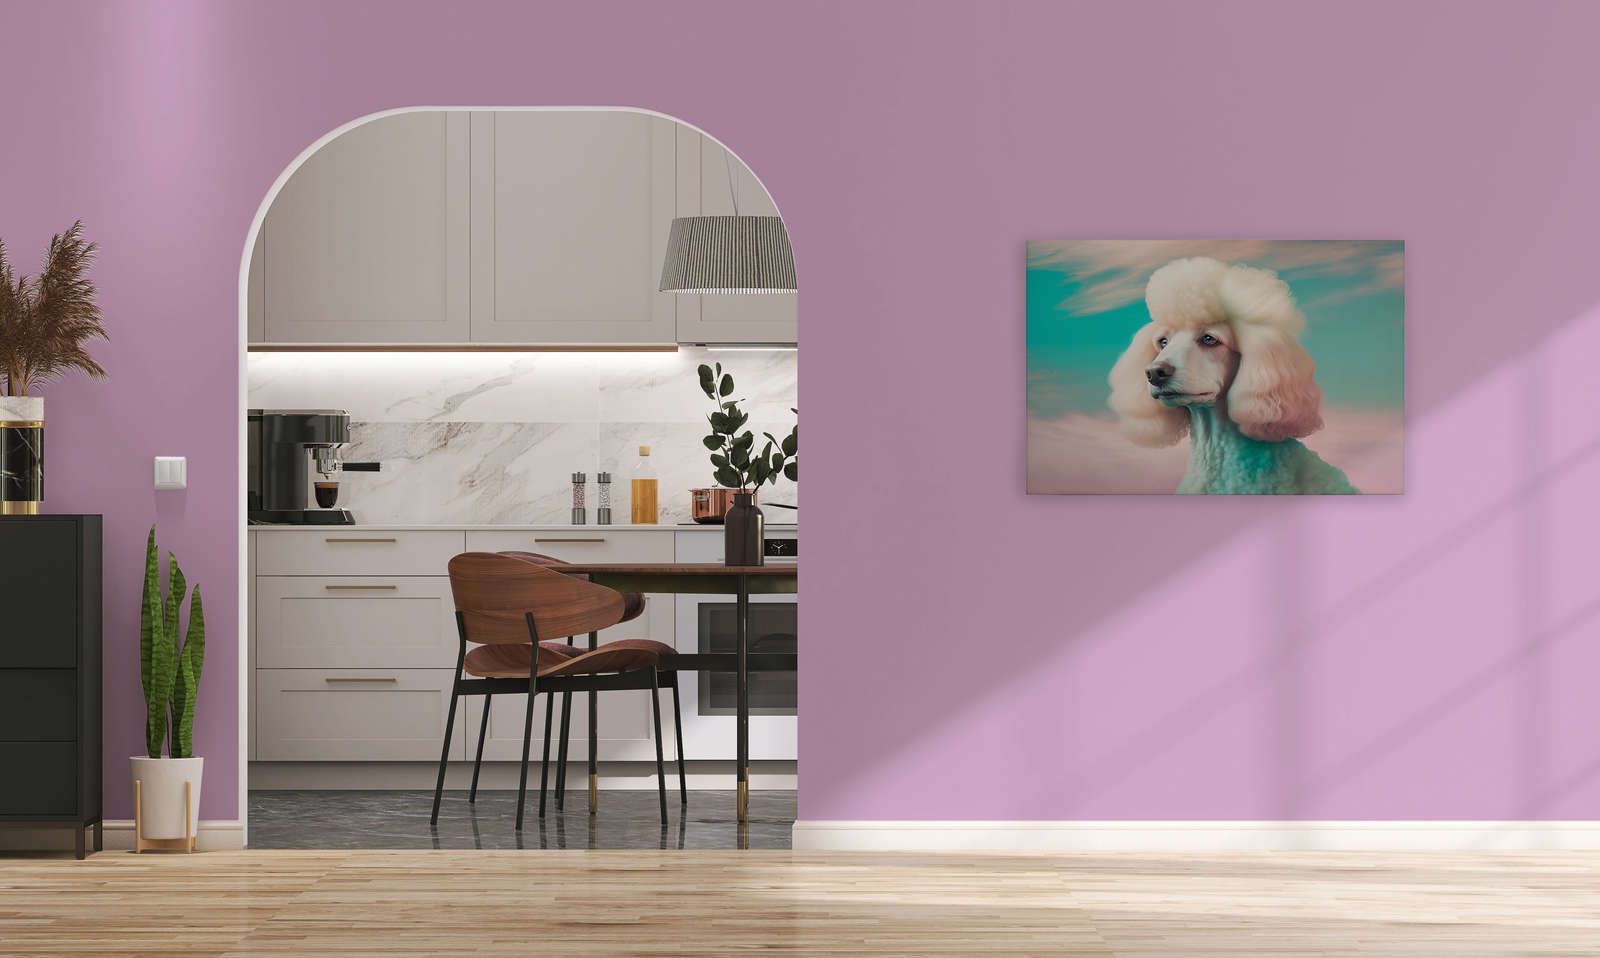             KI Canvas schilderij »rainbow dog« - 90 cm x 60 cm
        